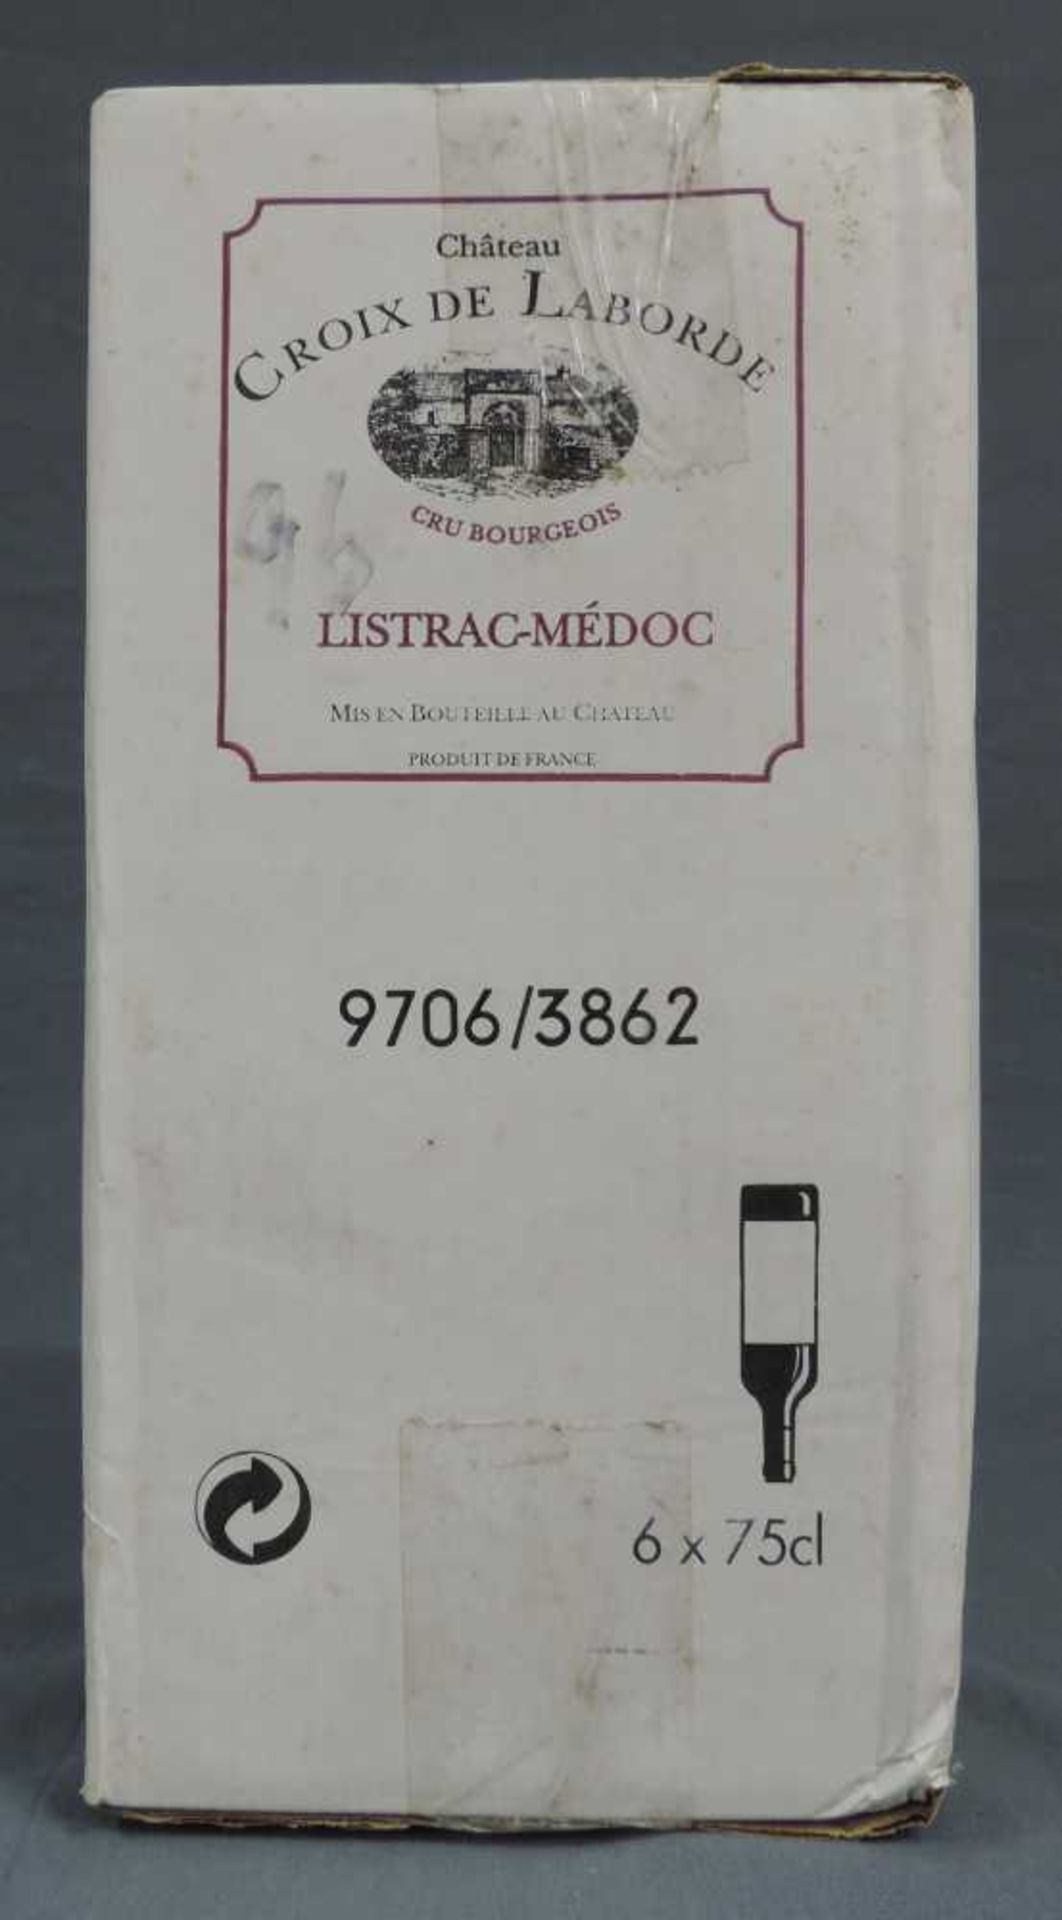 1996 Château Croix de Laborde, Listrac - Medoc A.C., France. 6 ganze Flaschen in Origionalkarton. - Bild 4 aus 4